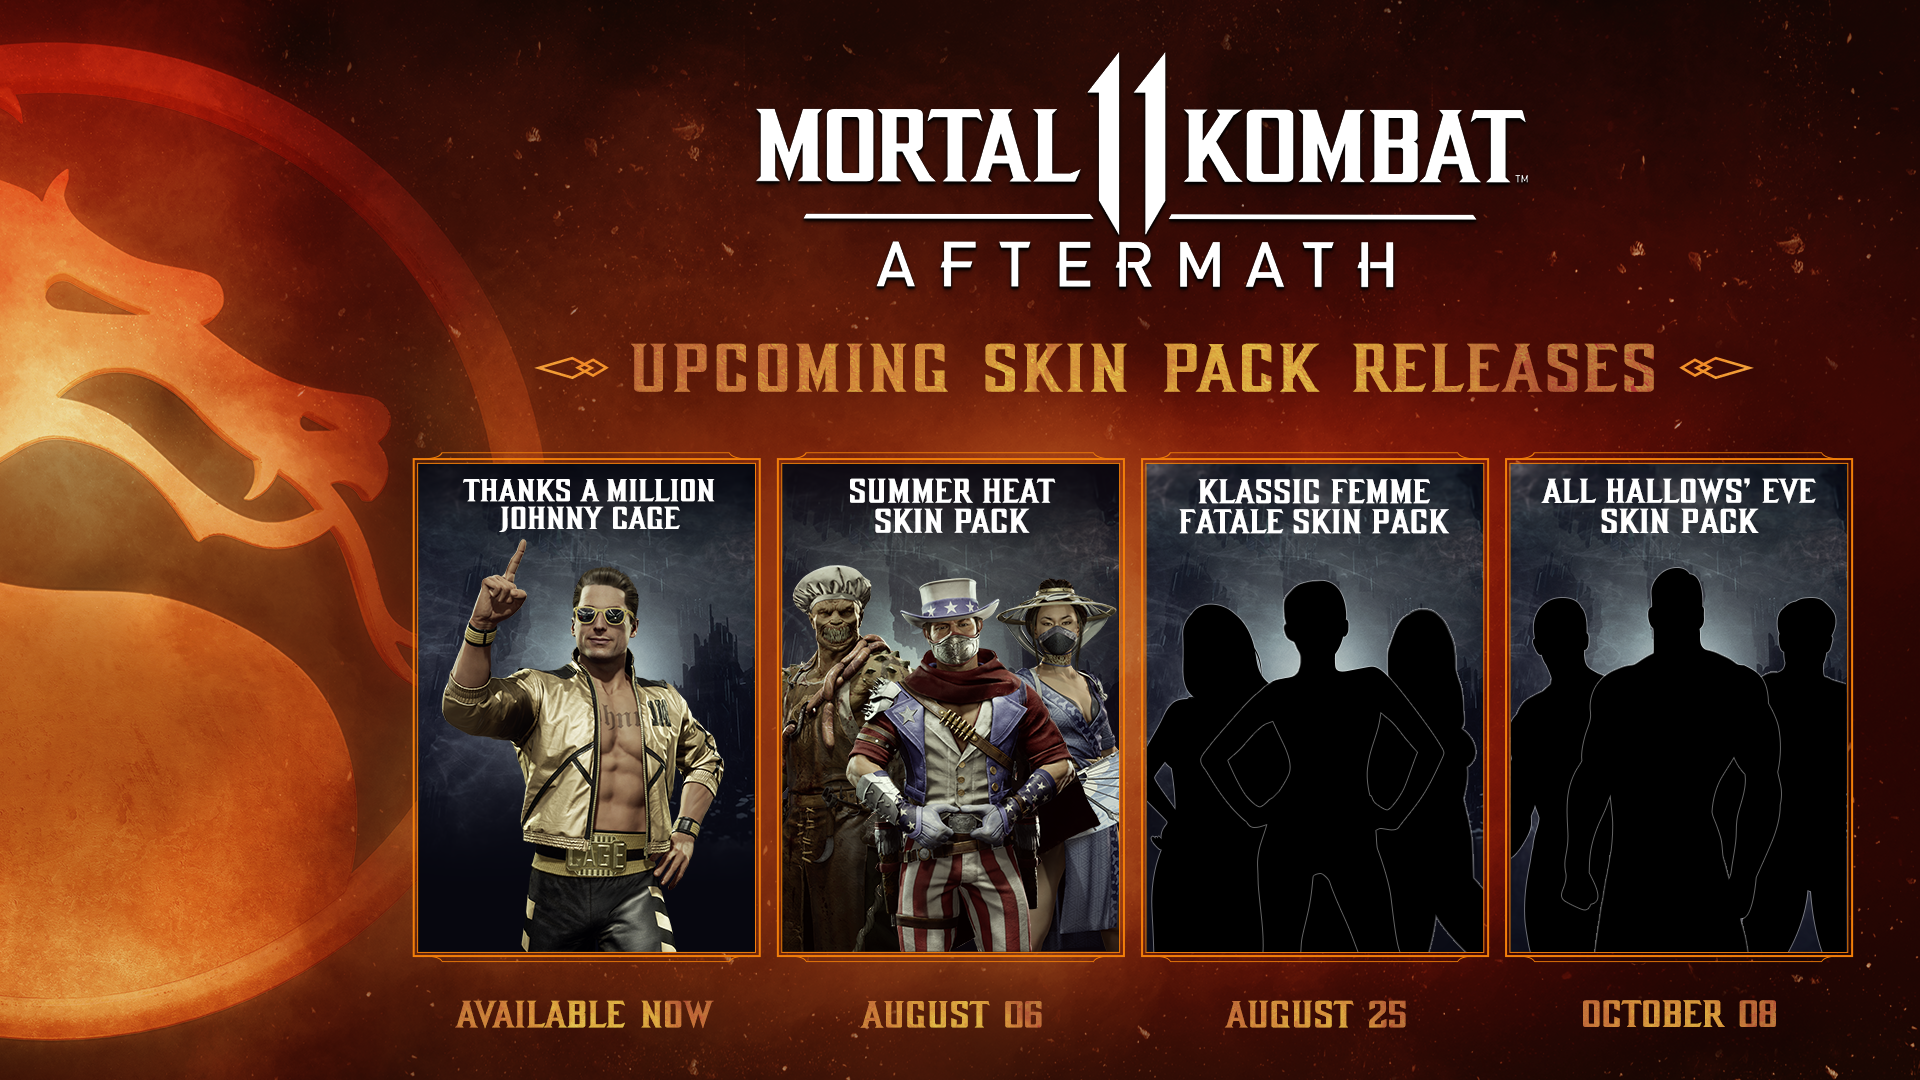 Shang Tsung MK3 Classic Skin - Mortal Kombat 9 